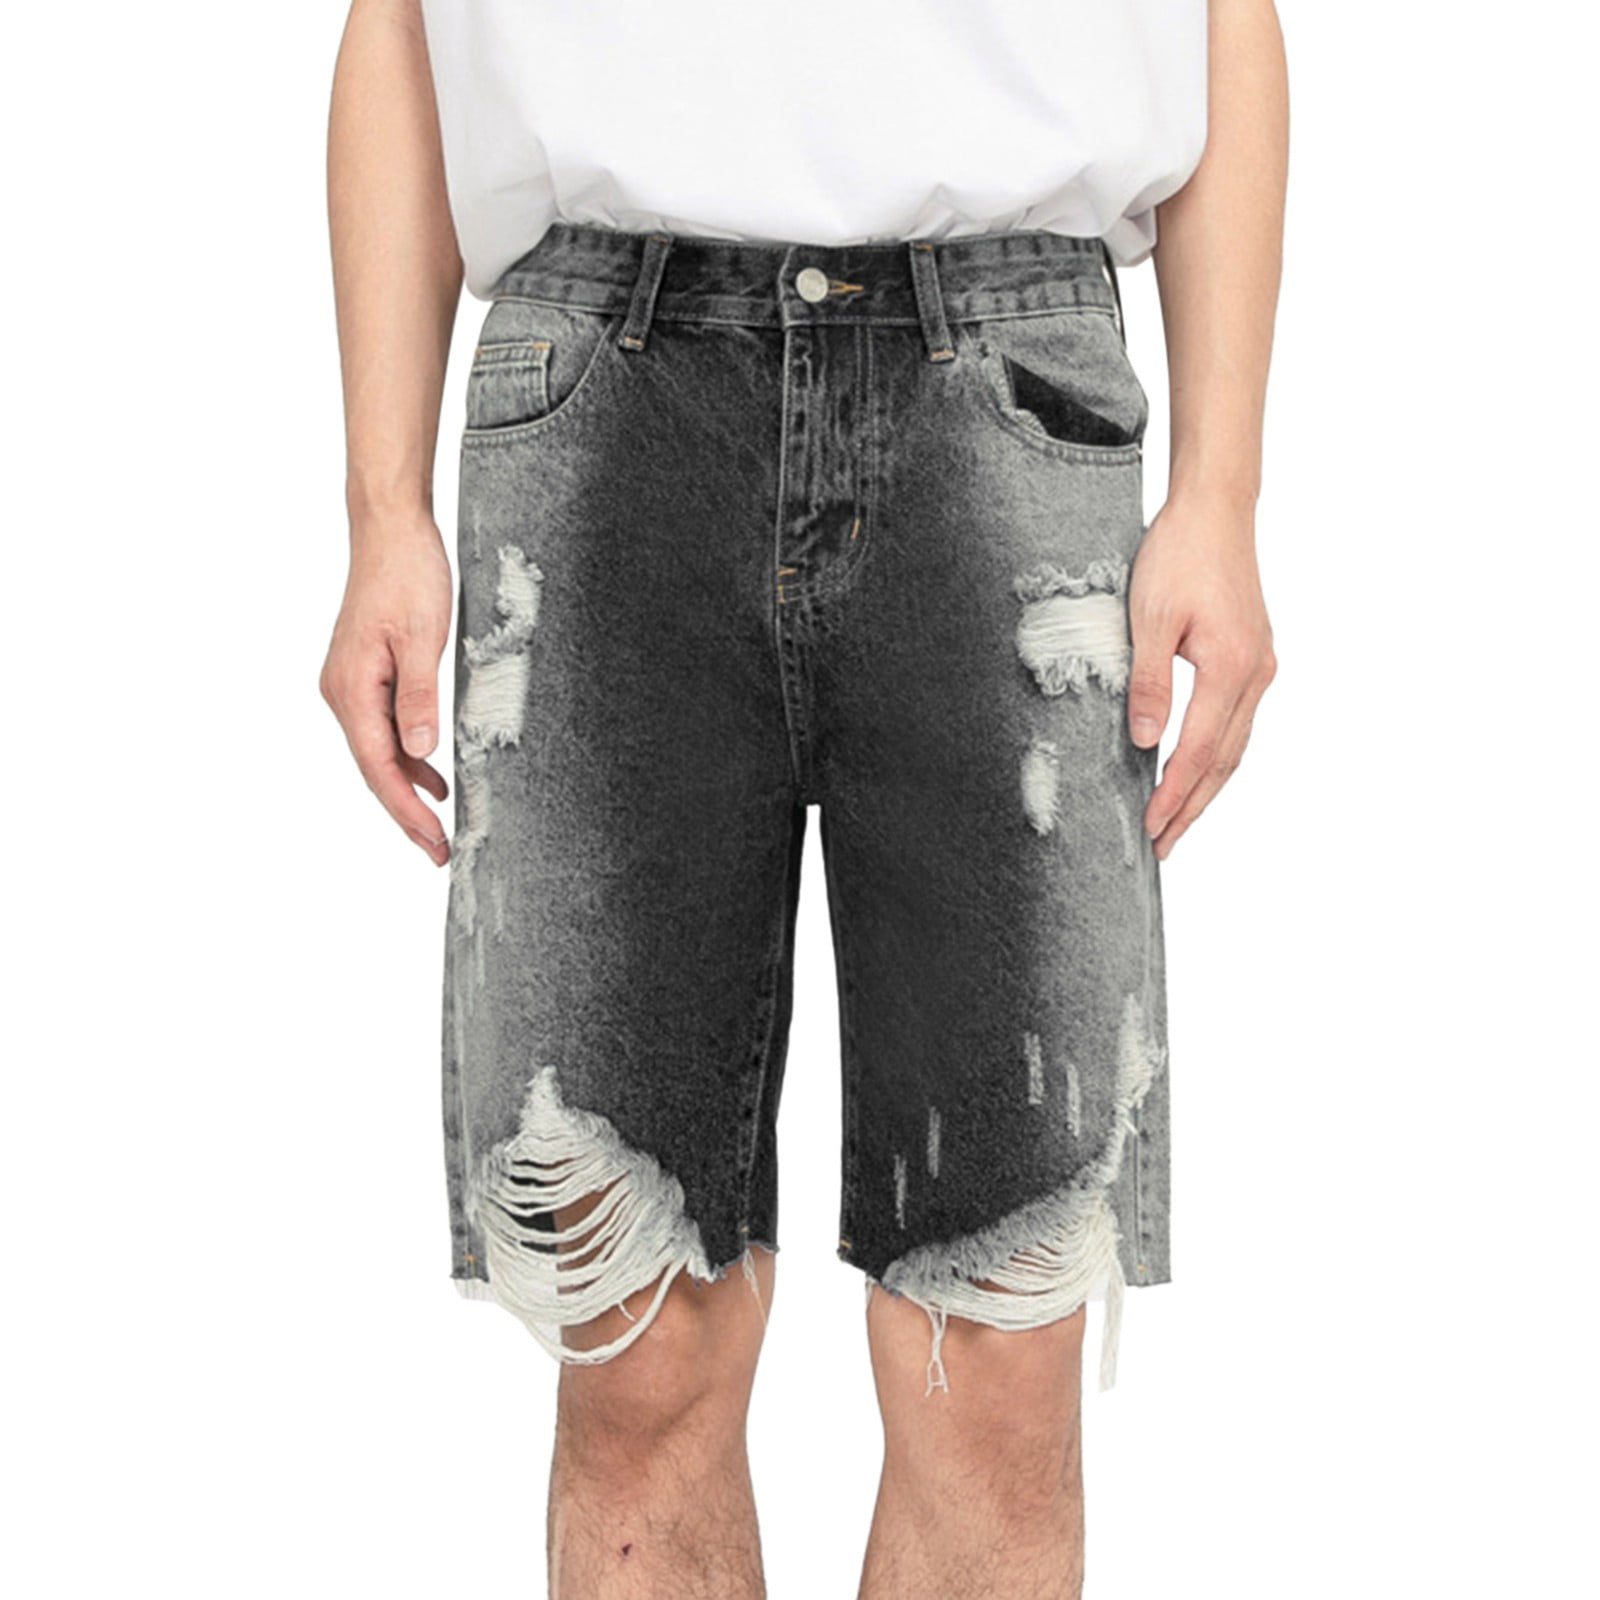 sebtyili mens custom jeans shorts gradual trend ragged loose hole split ...